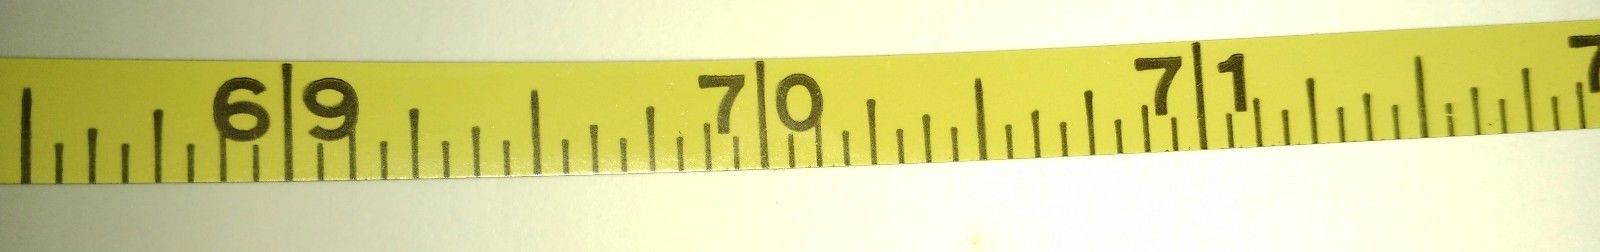 Lufkin Executive Tape ¼" x 6' Refill "s & 64ths RW06P USA